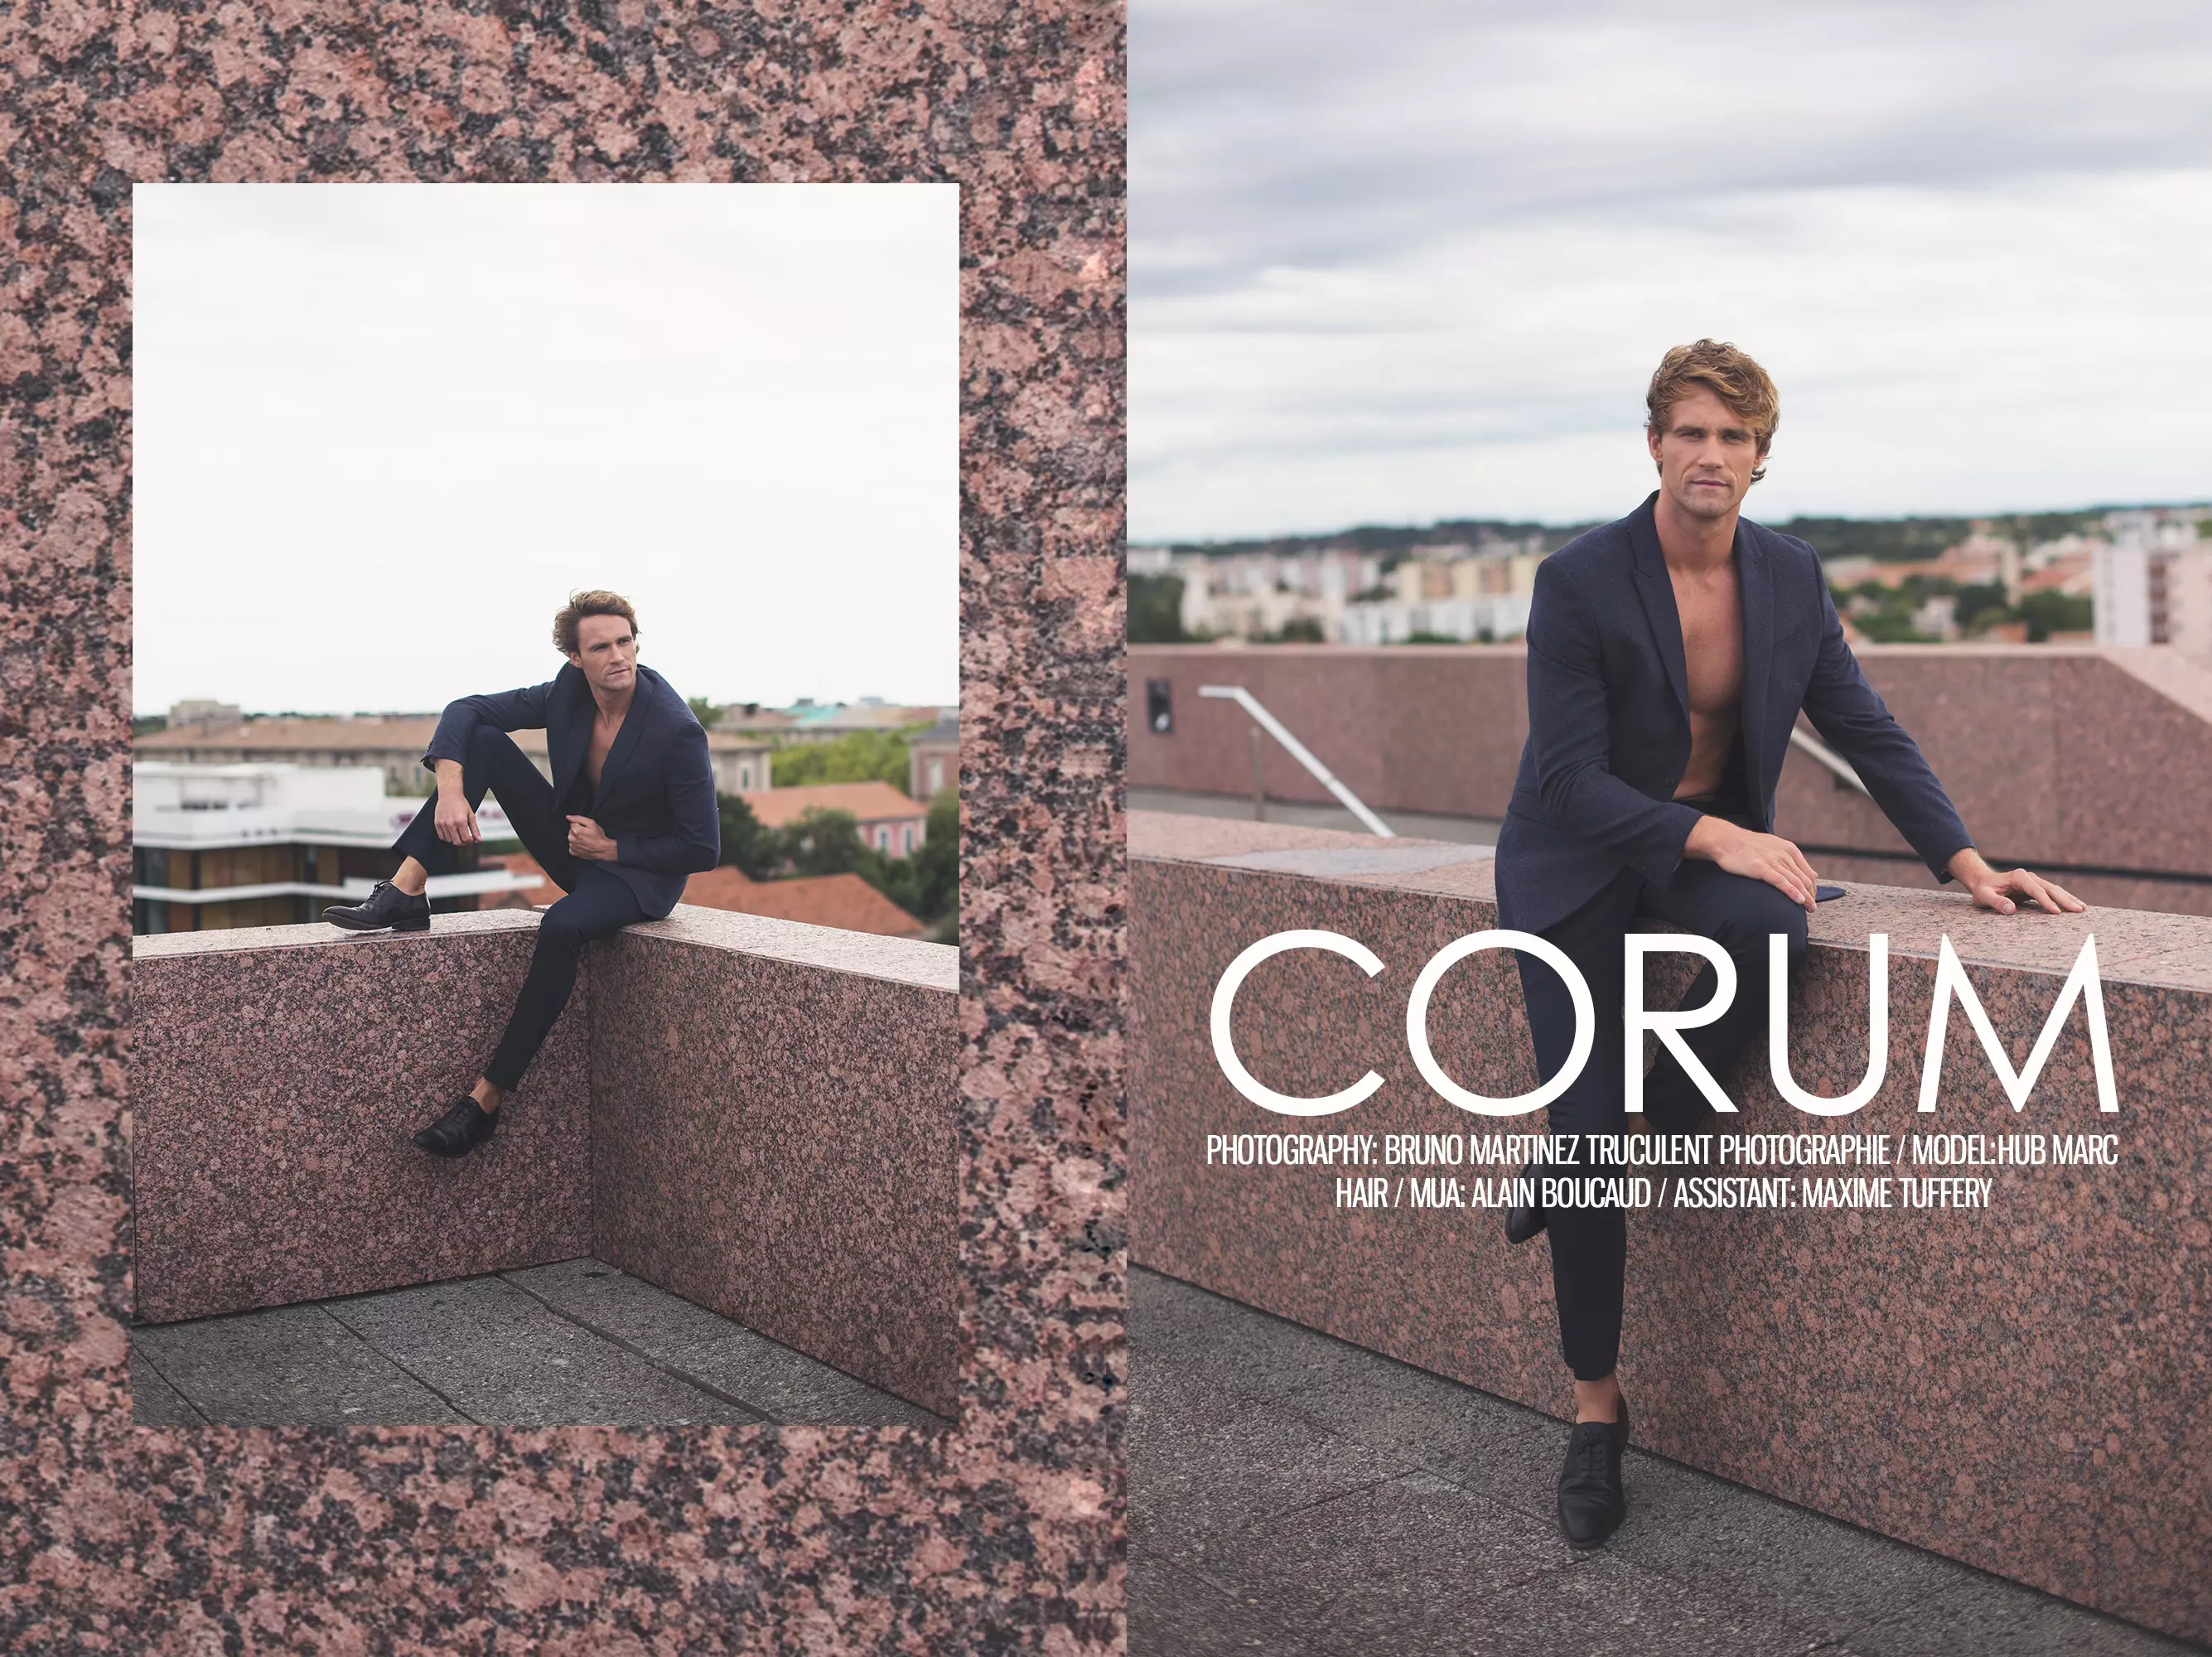 “Corum” Hub Marc de Bruno Martinez para Fashionably Male